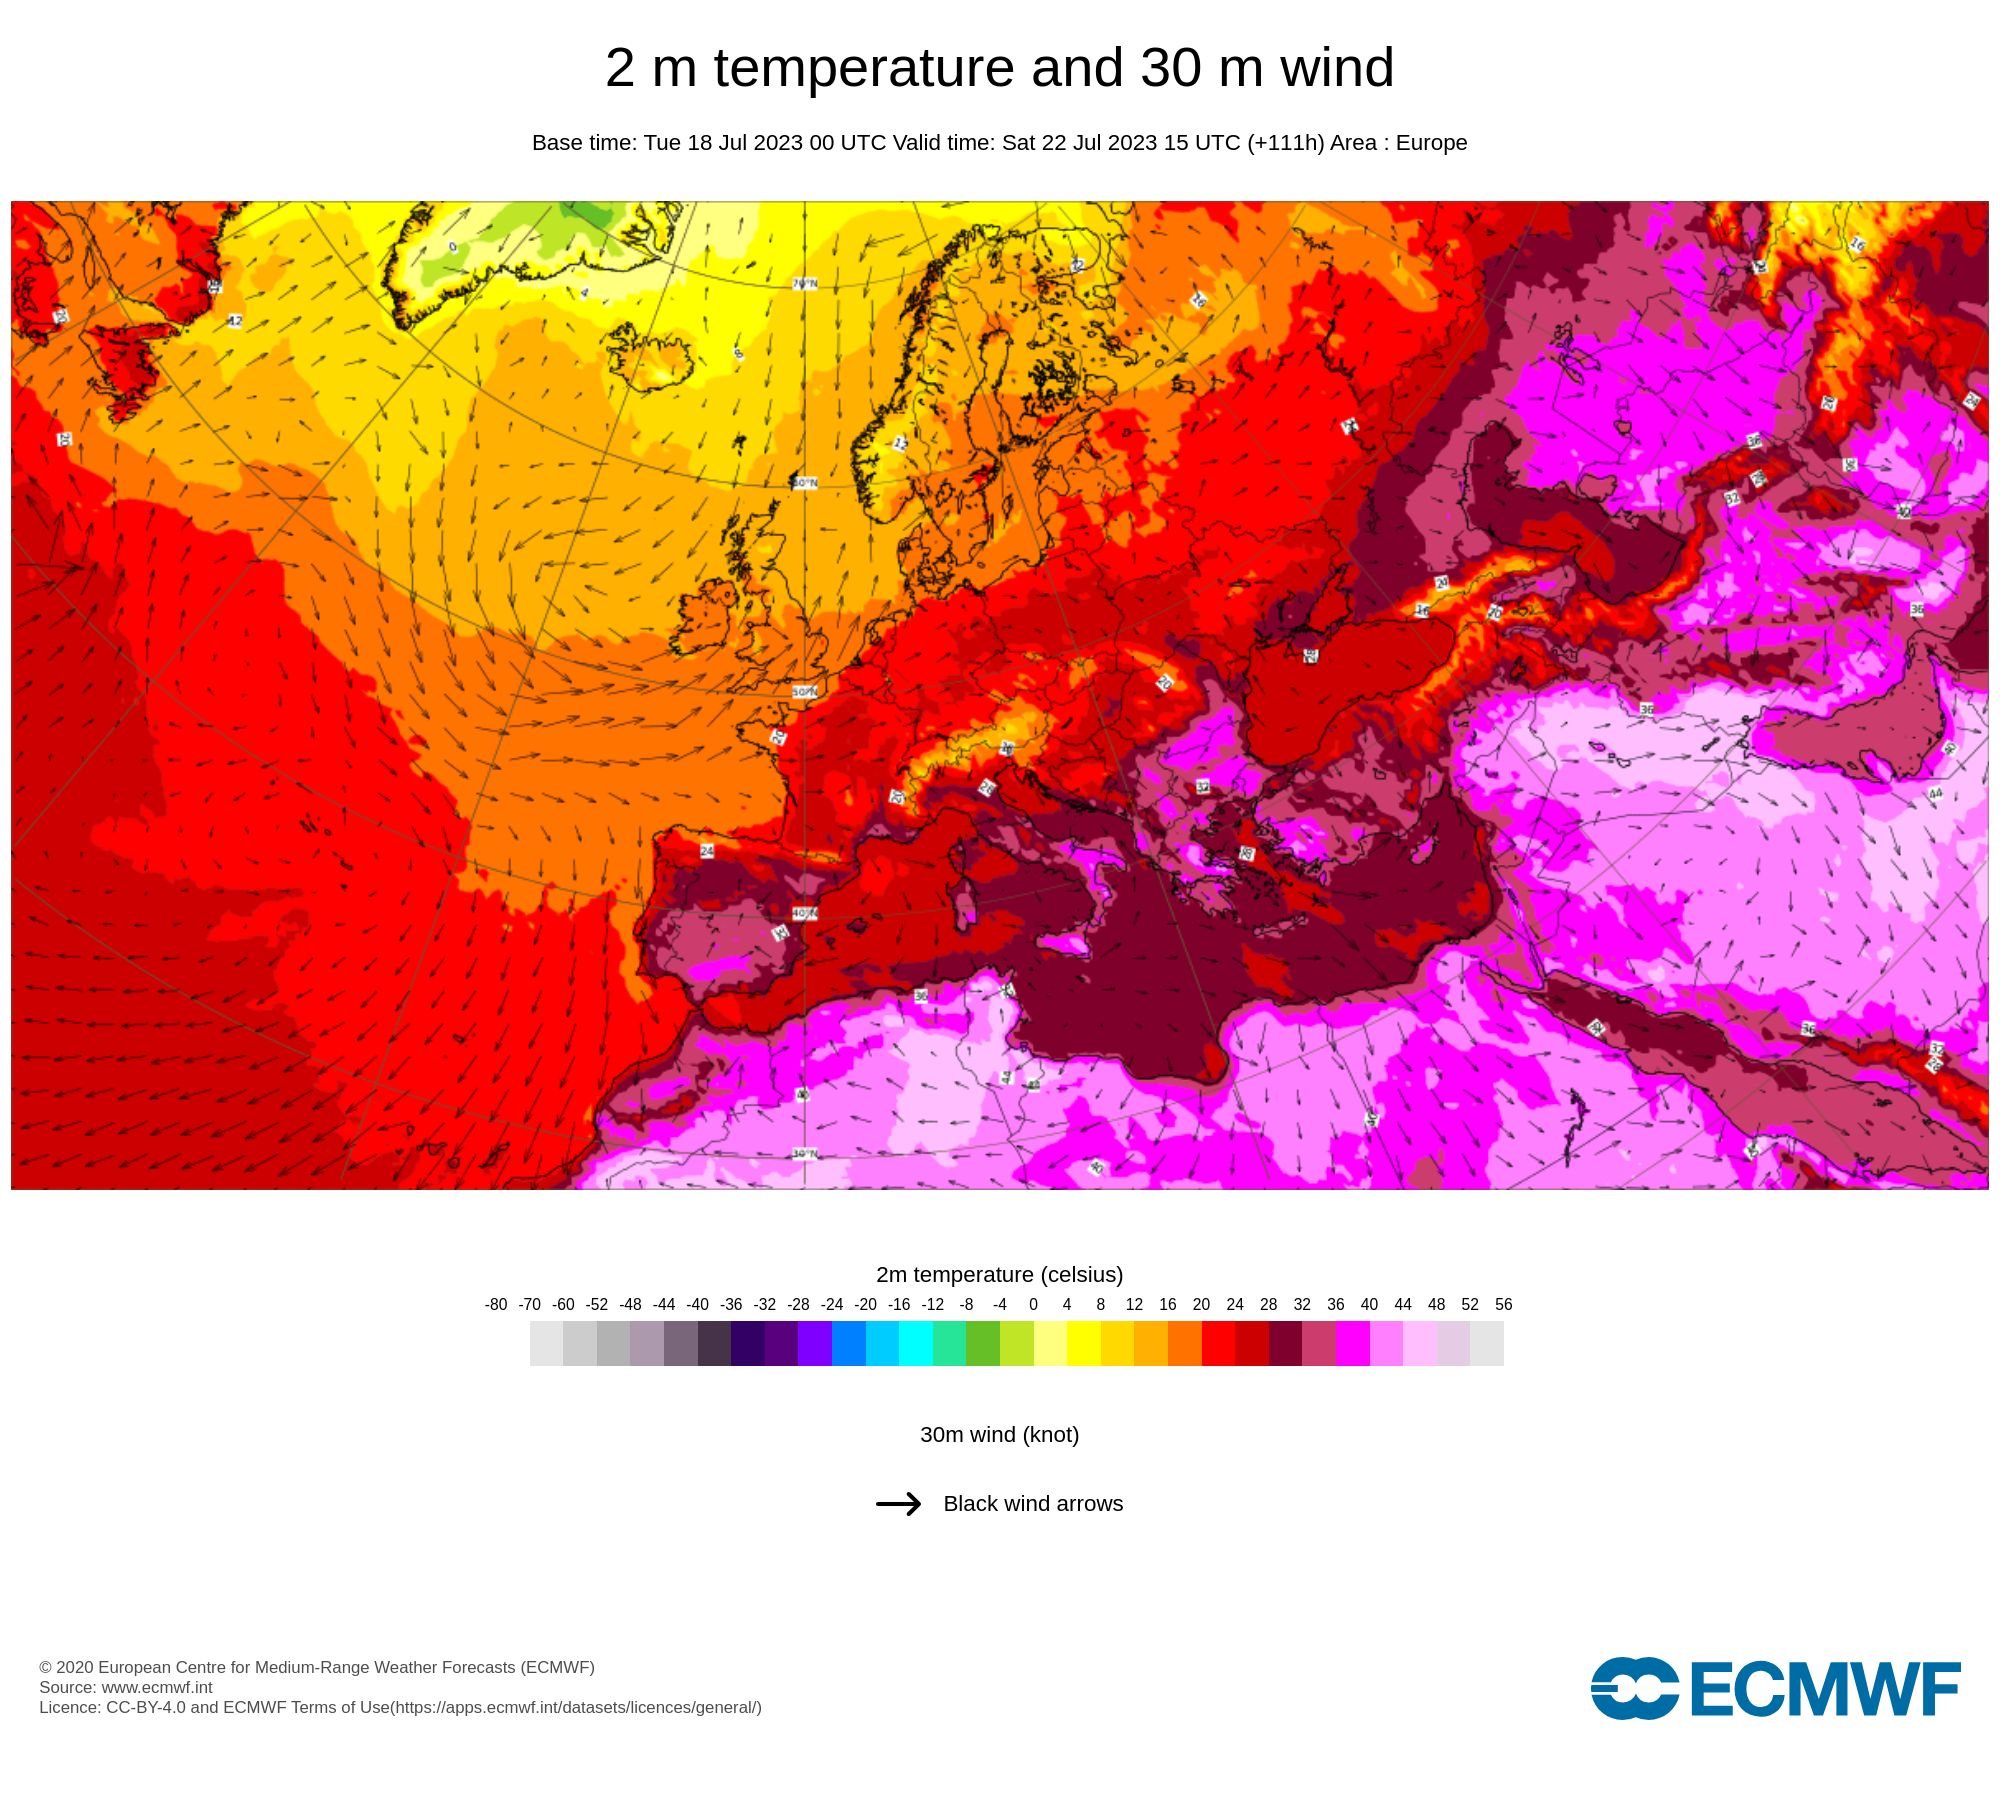 22 de julho de 2023: temperaturas às 16 horas (em Portugal continental)